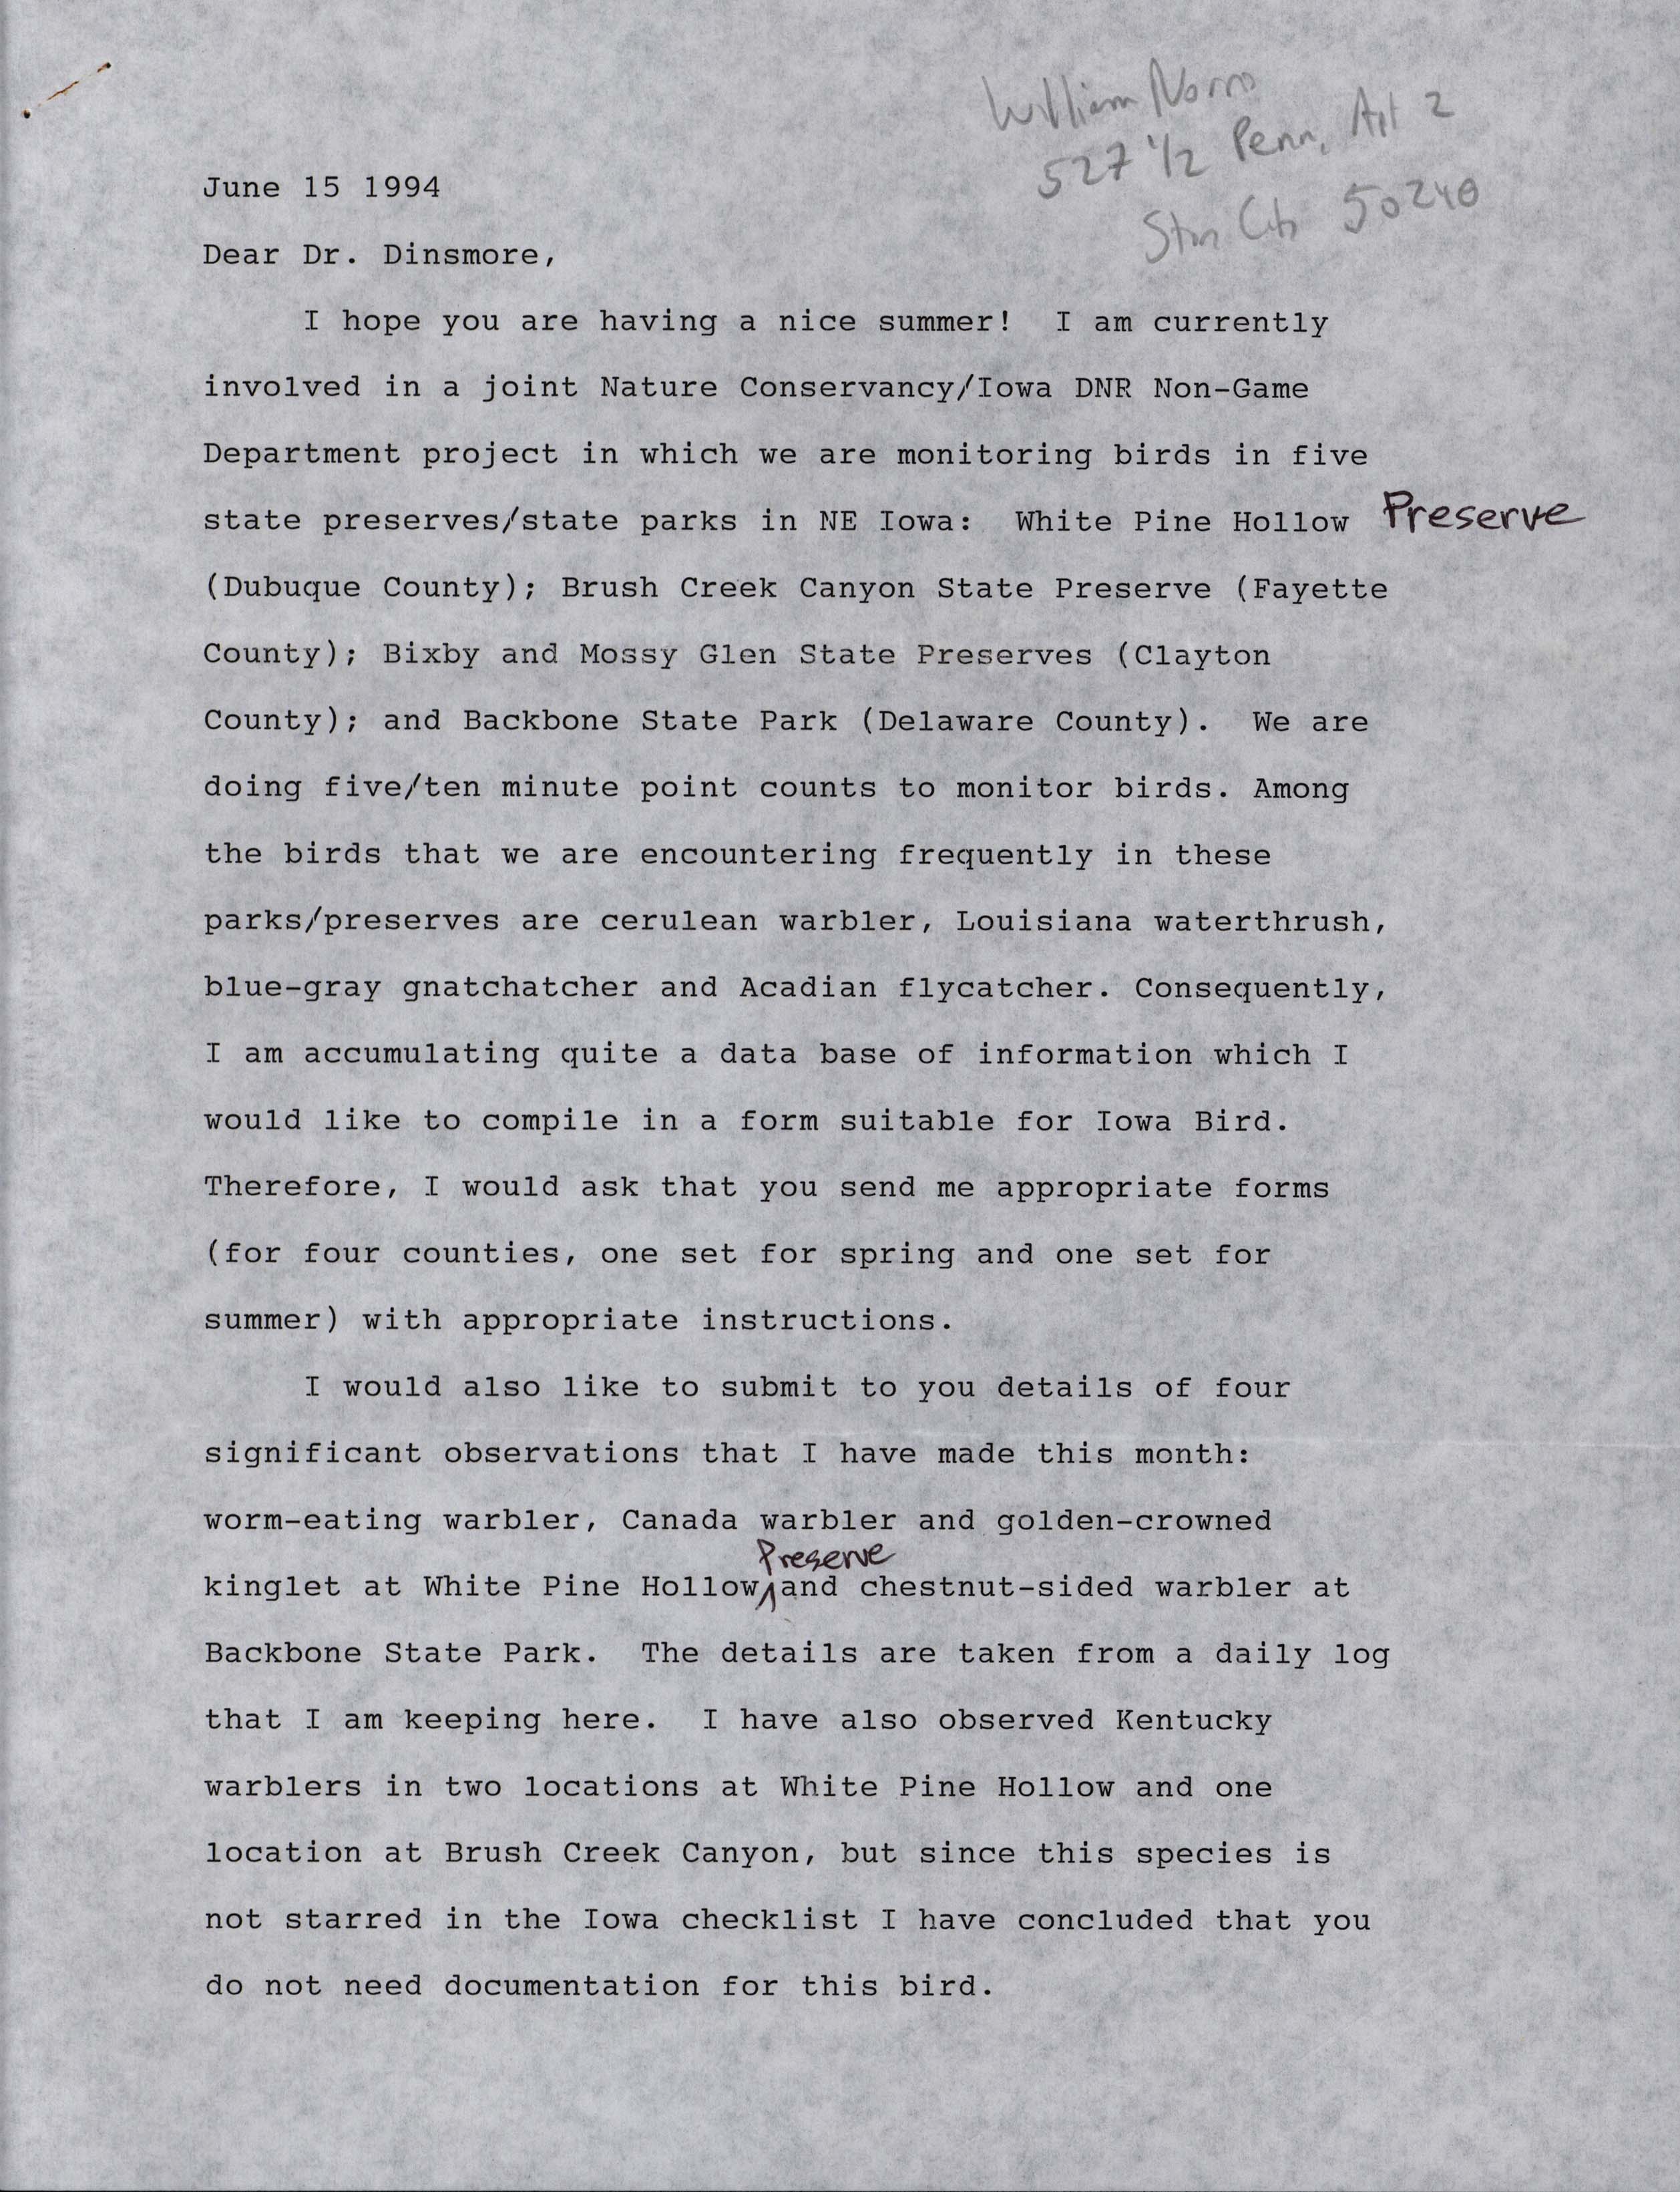 William Norris letter to Jim Dinsmore regarding birds sighted in North-East Iowa, June 15, 1994